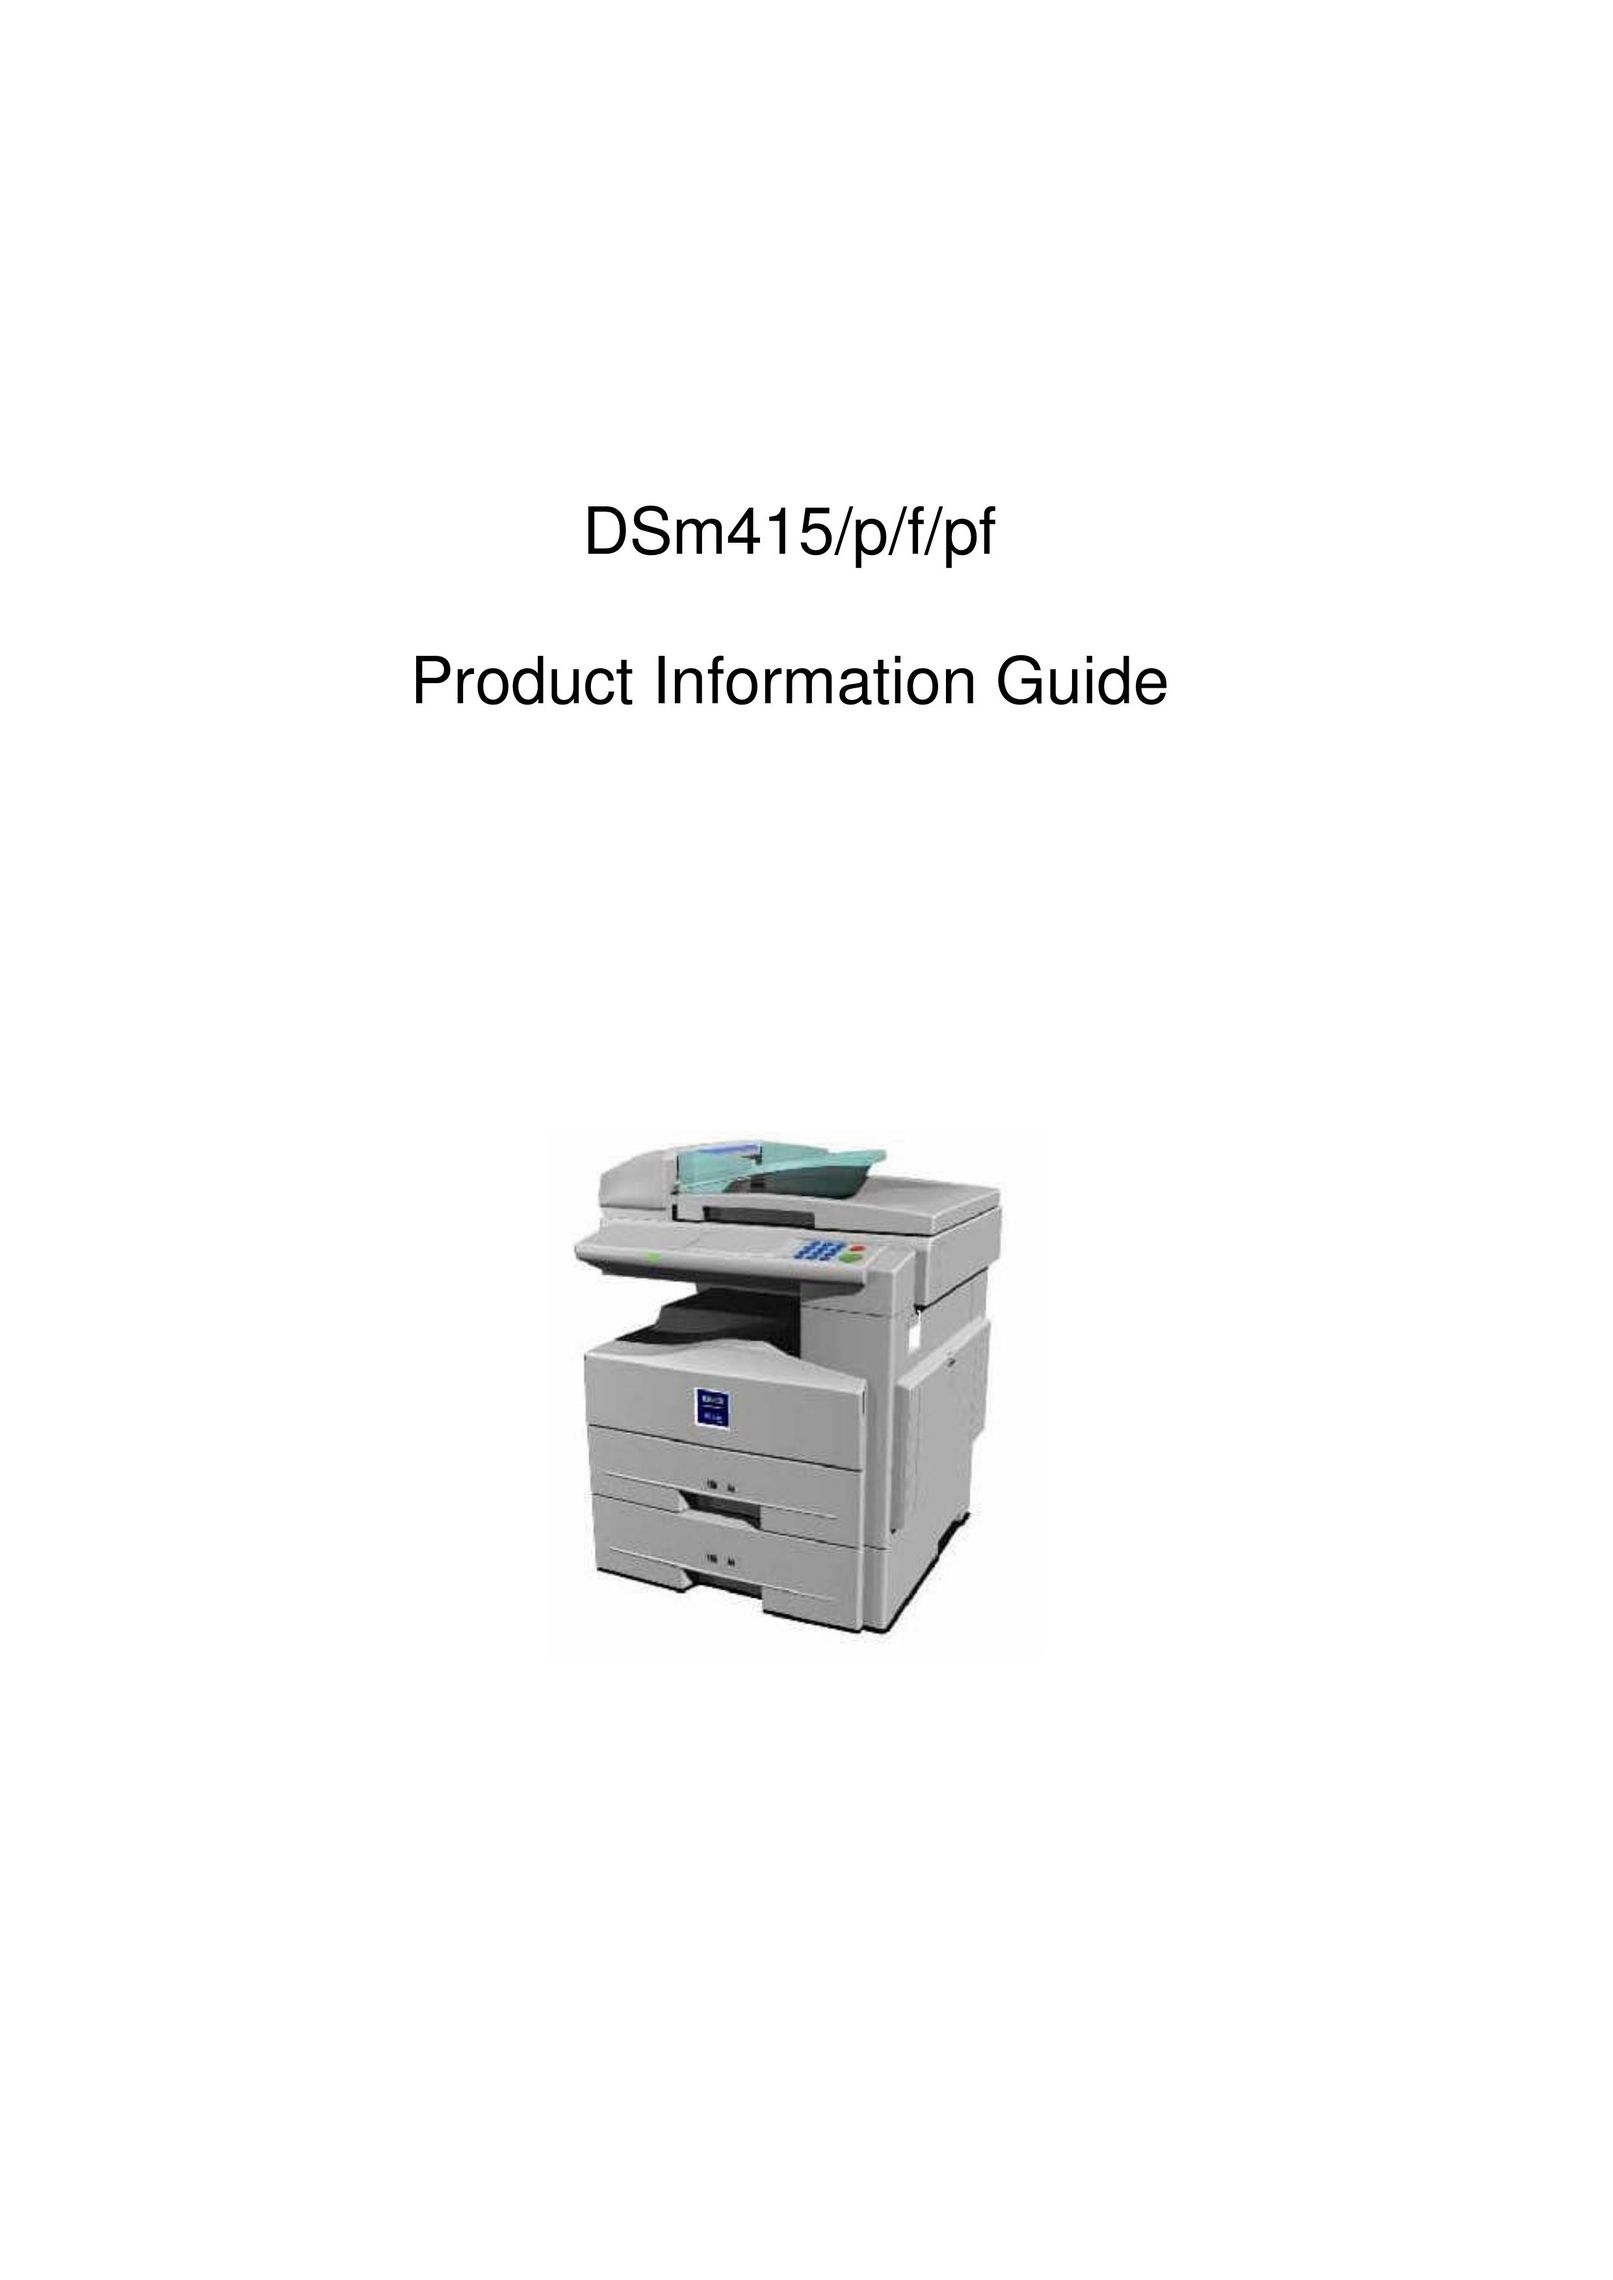 3Com DSm415 Printer User Manual